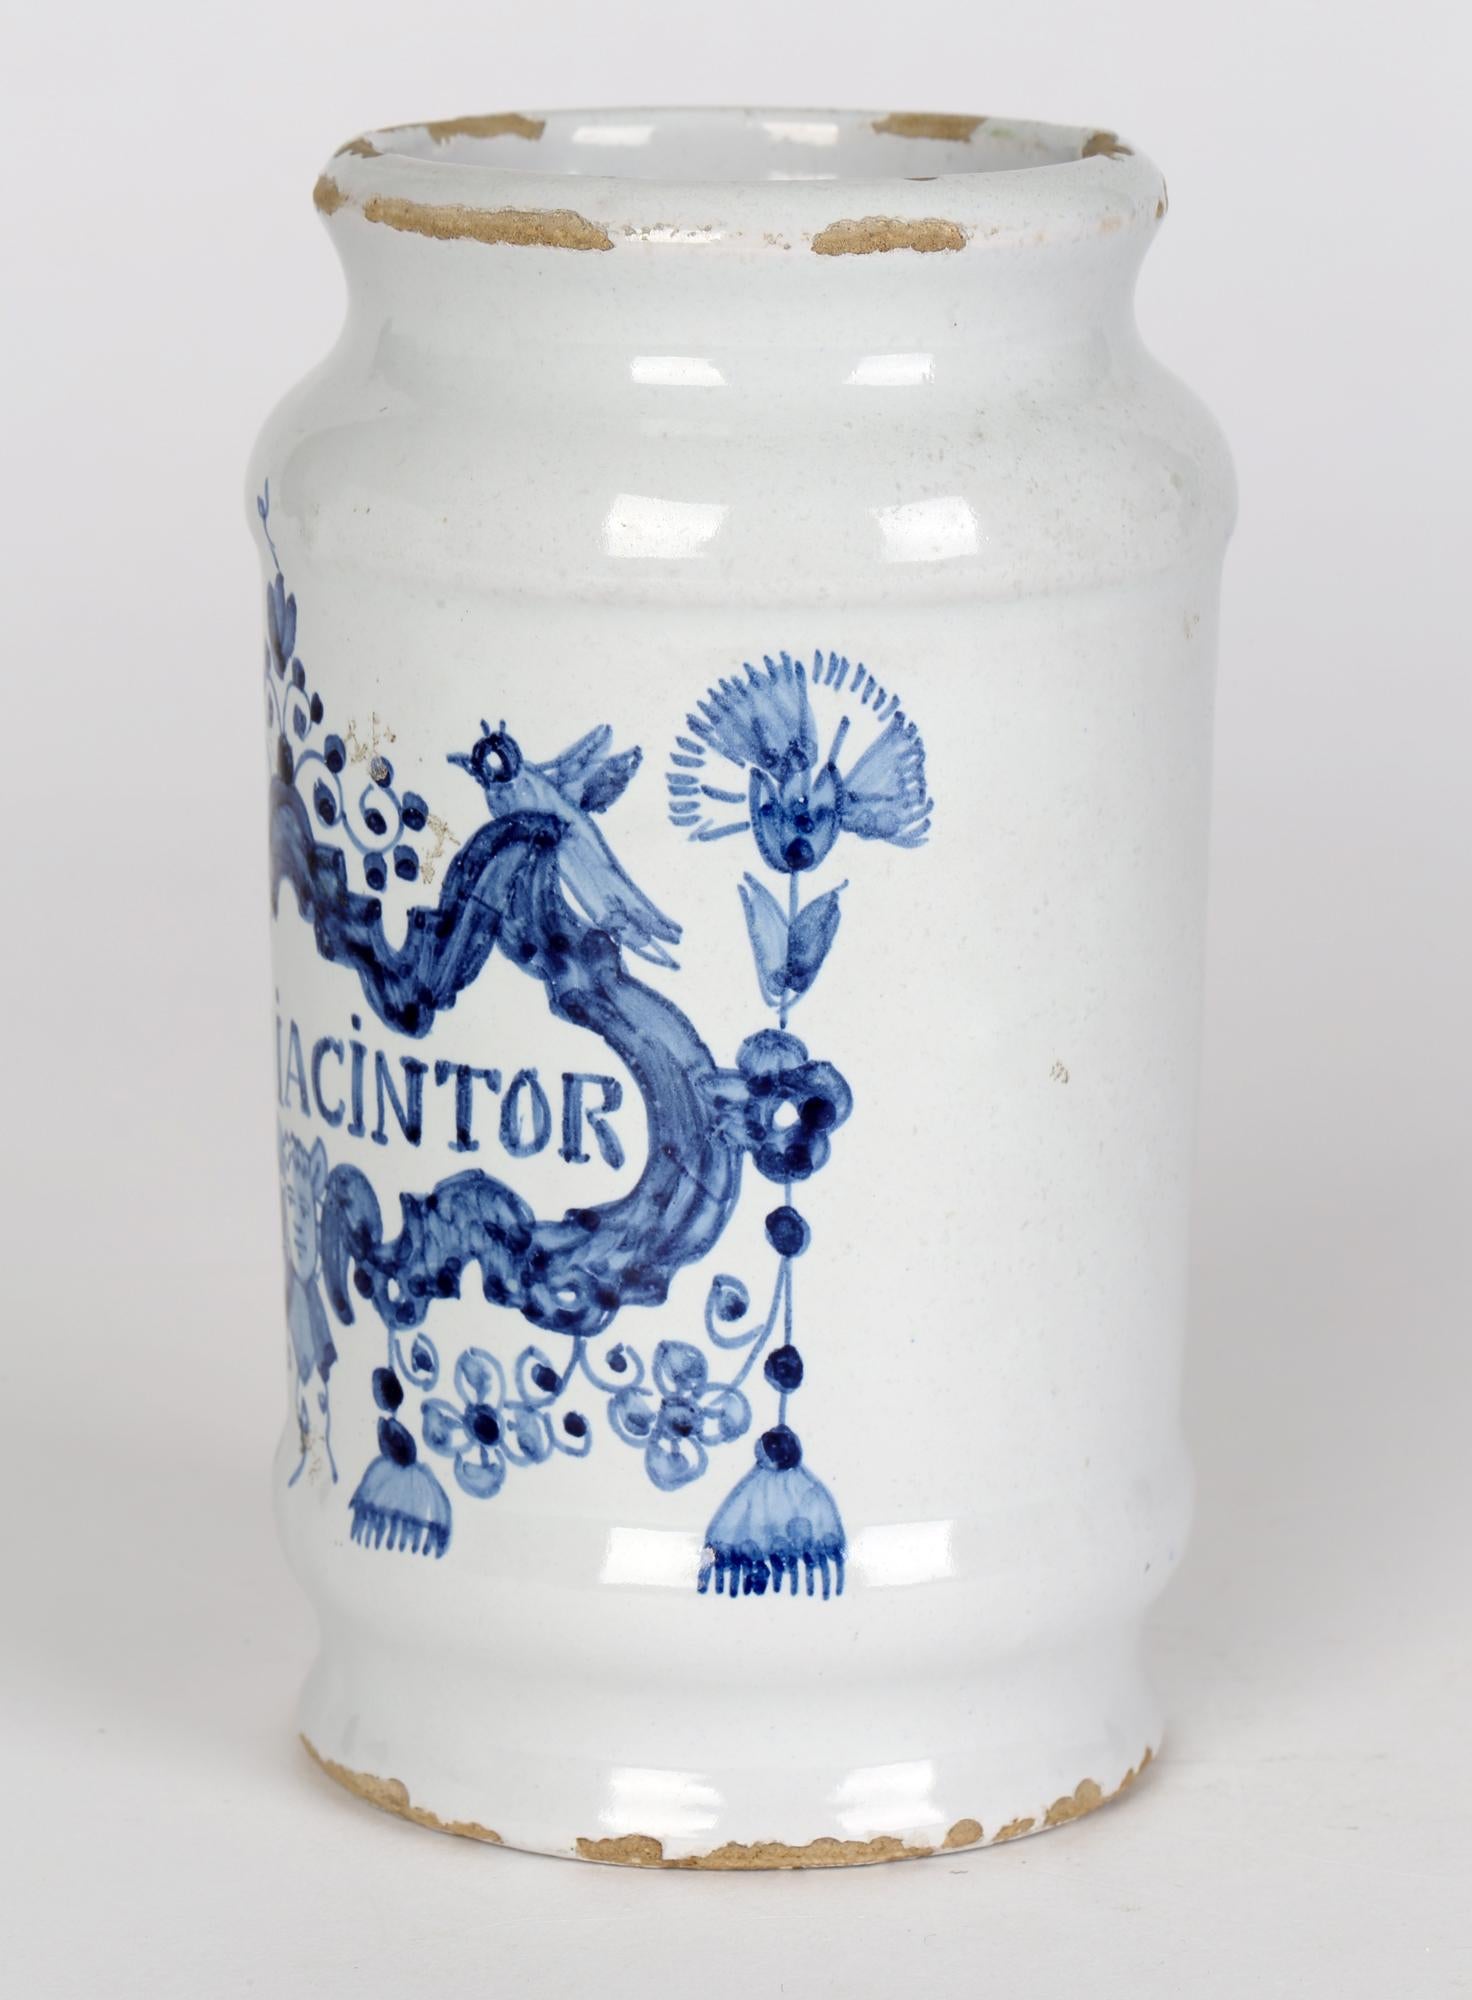 Delft Pottery Apothecary Jar Marked Conf.Hiacintor 7